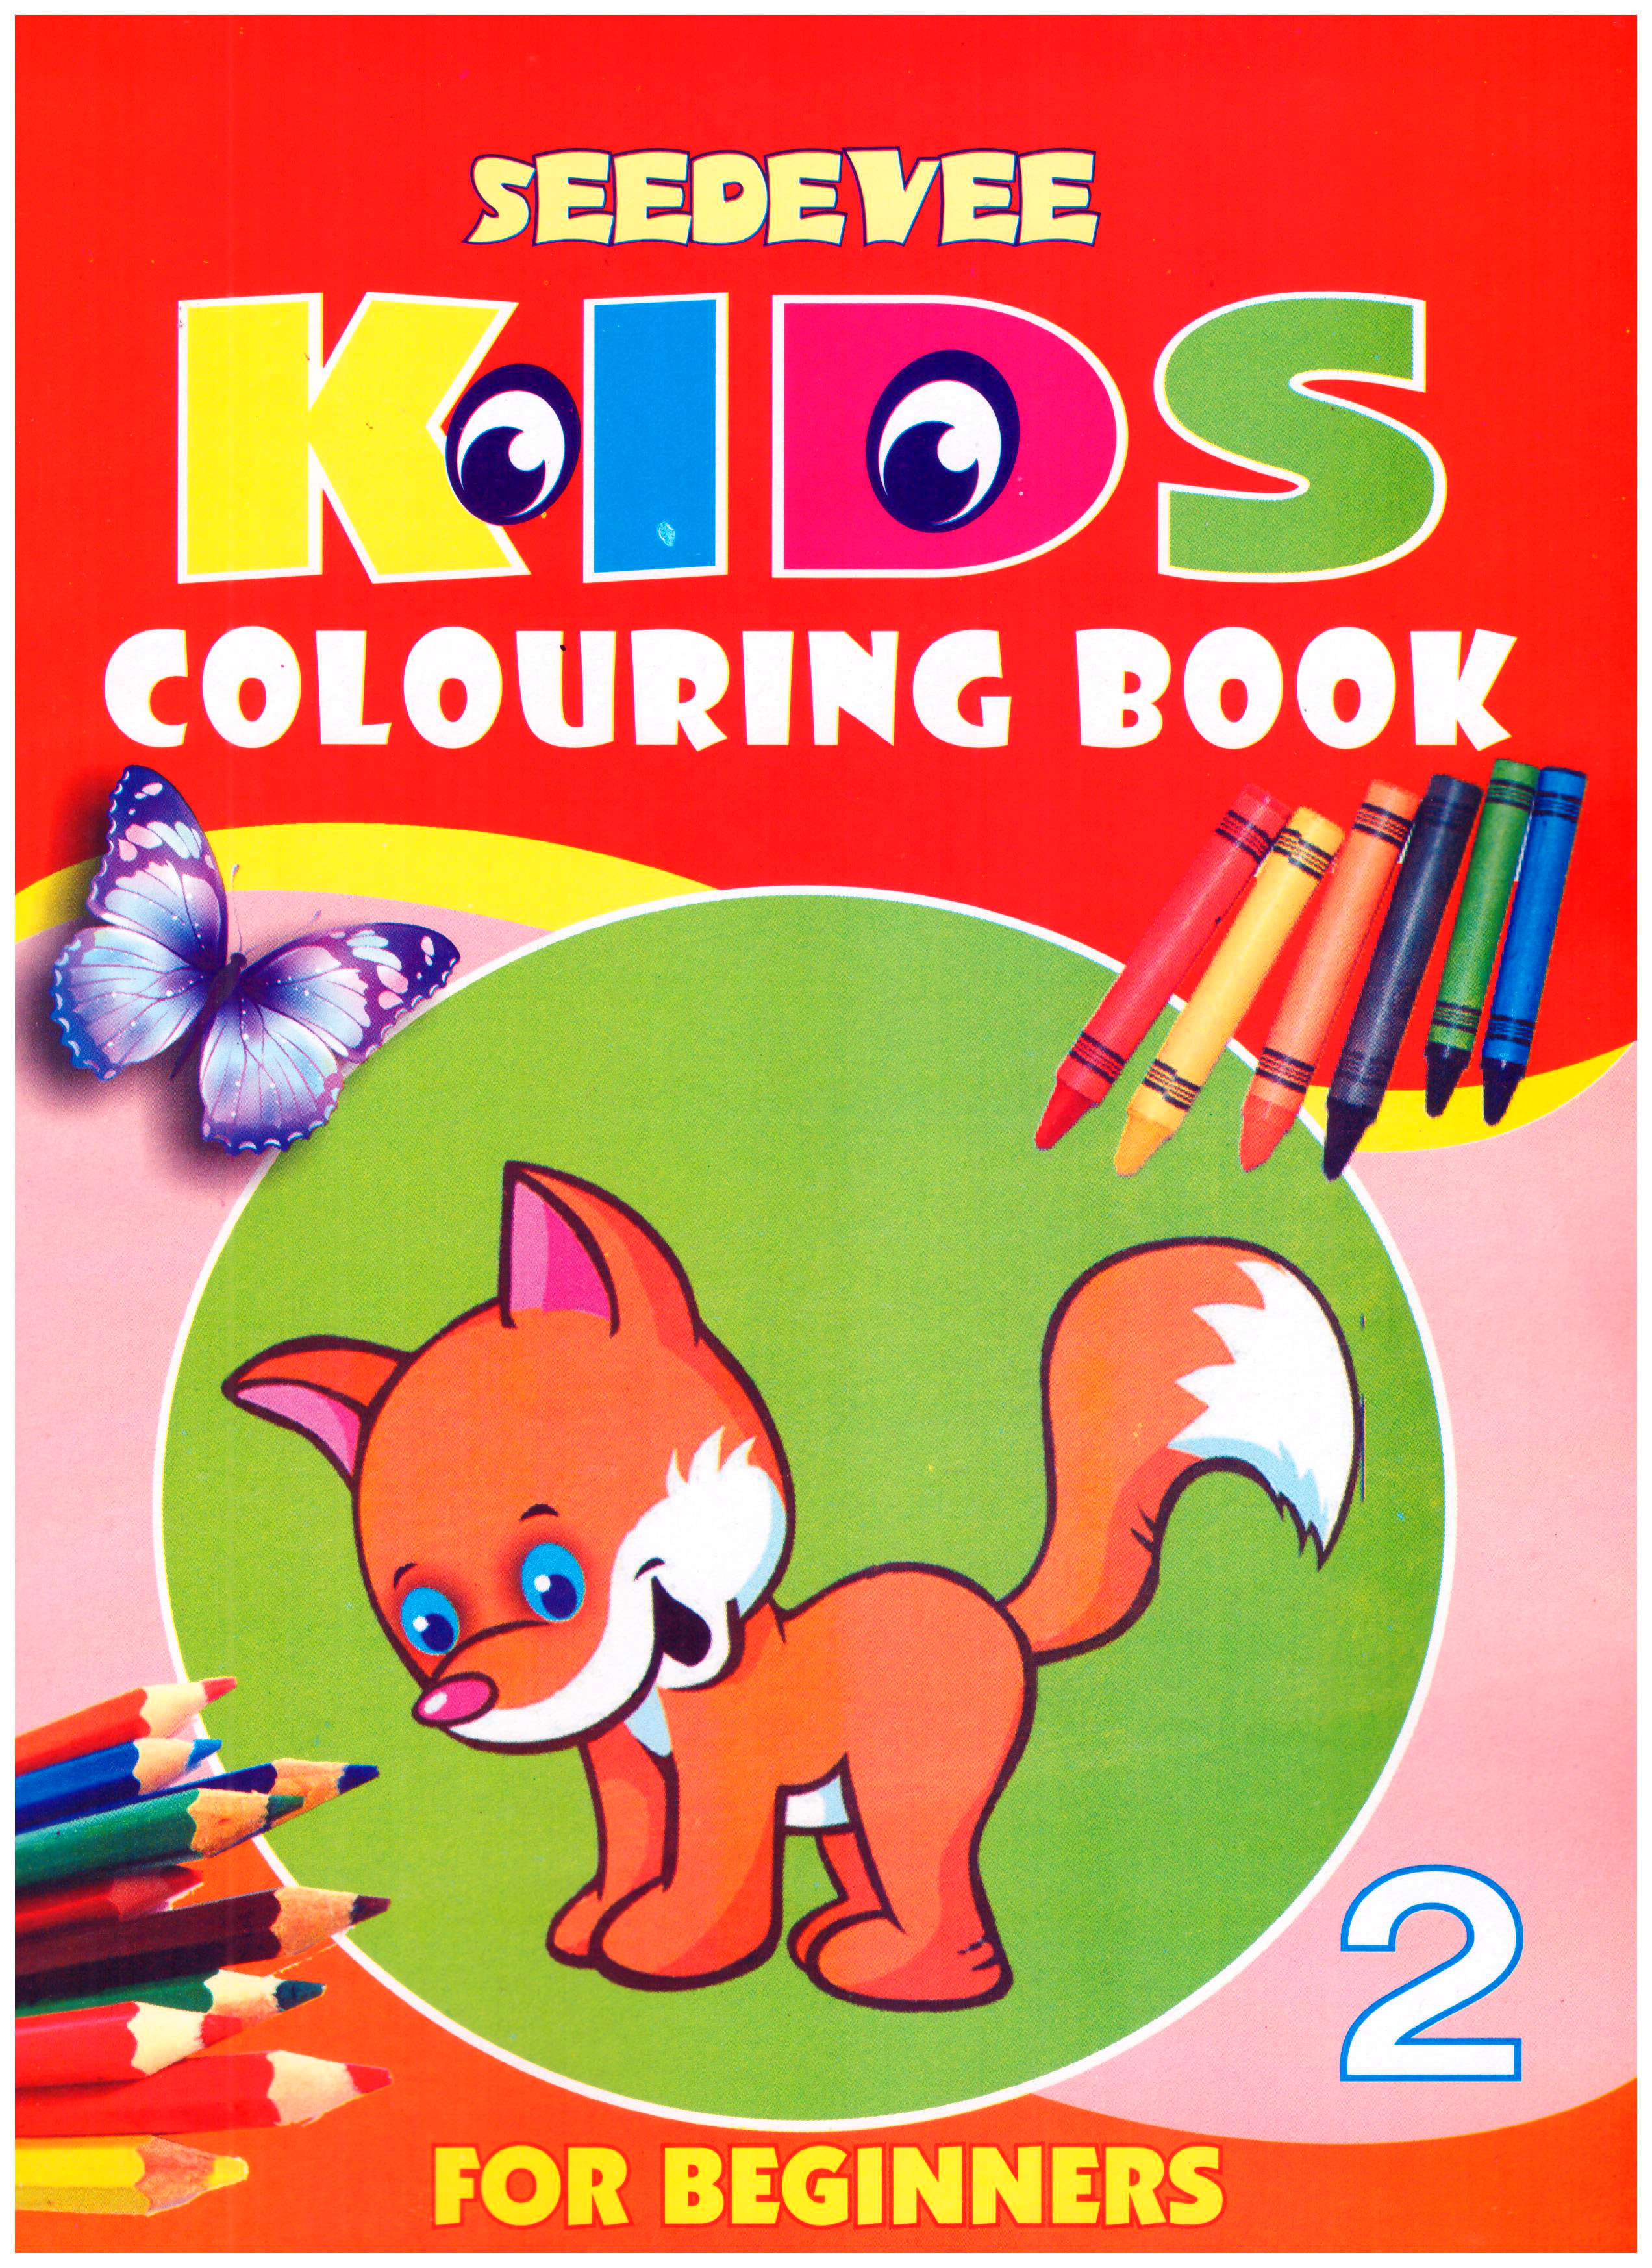 Seedevee Kids Colouring Book for Beginners 2